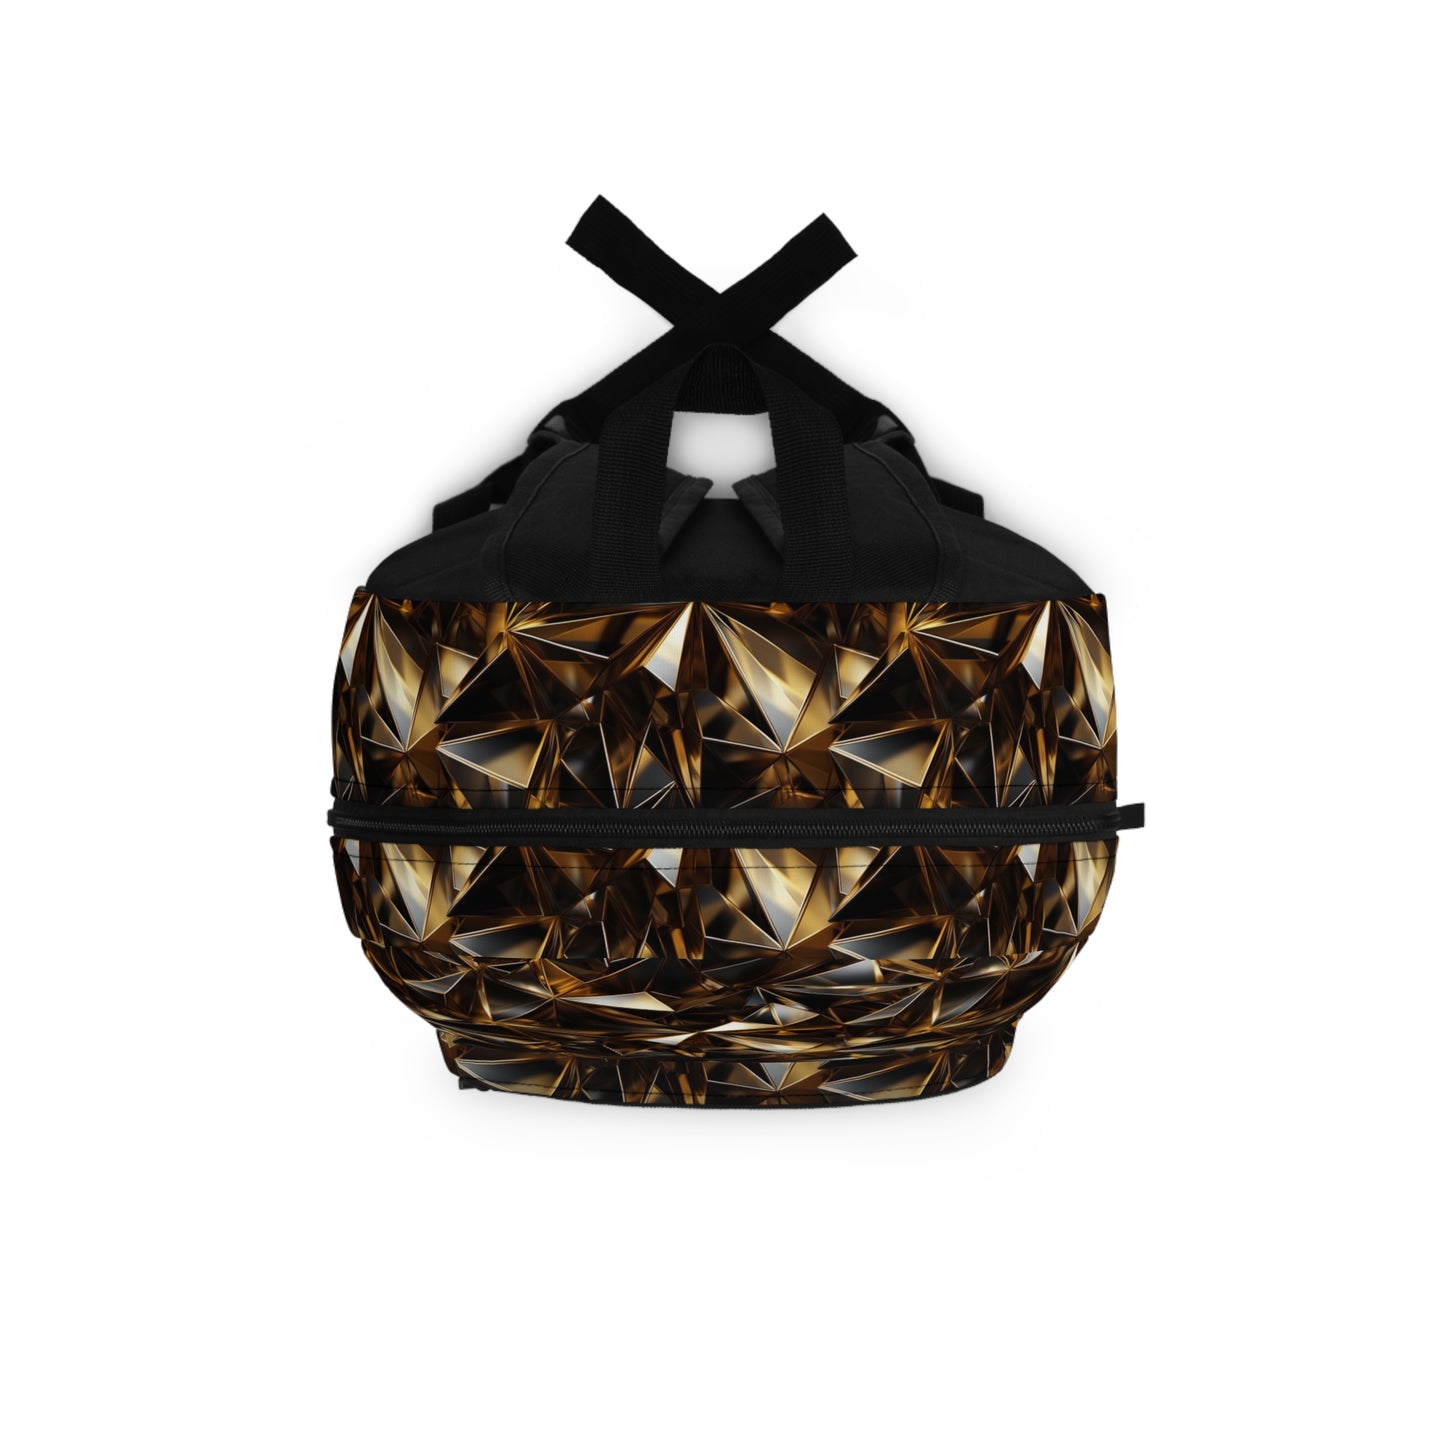 Black & Gold Jewels Backpack